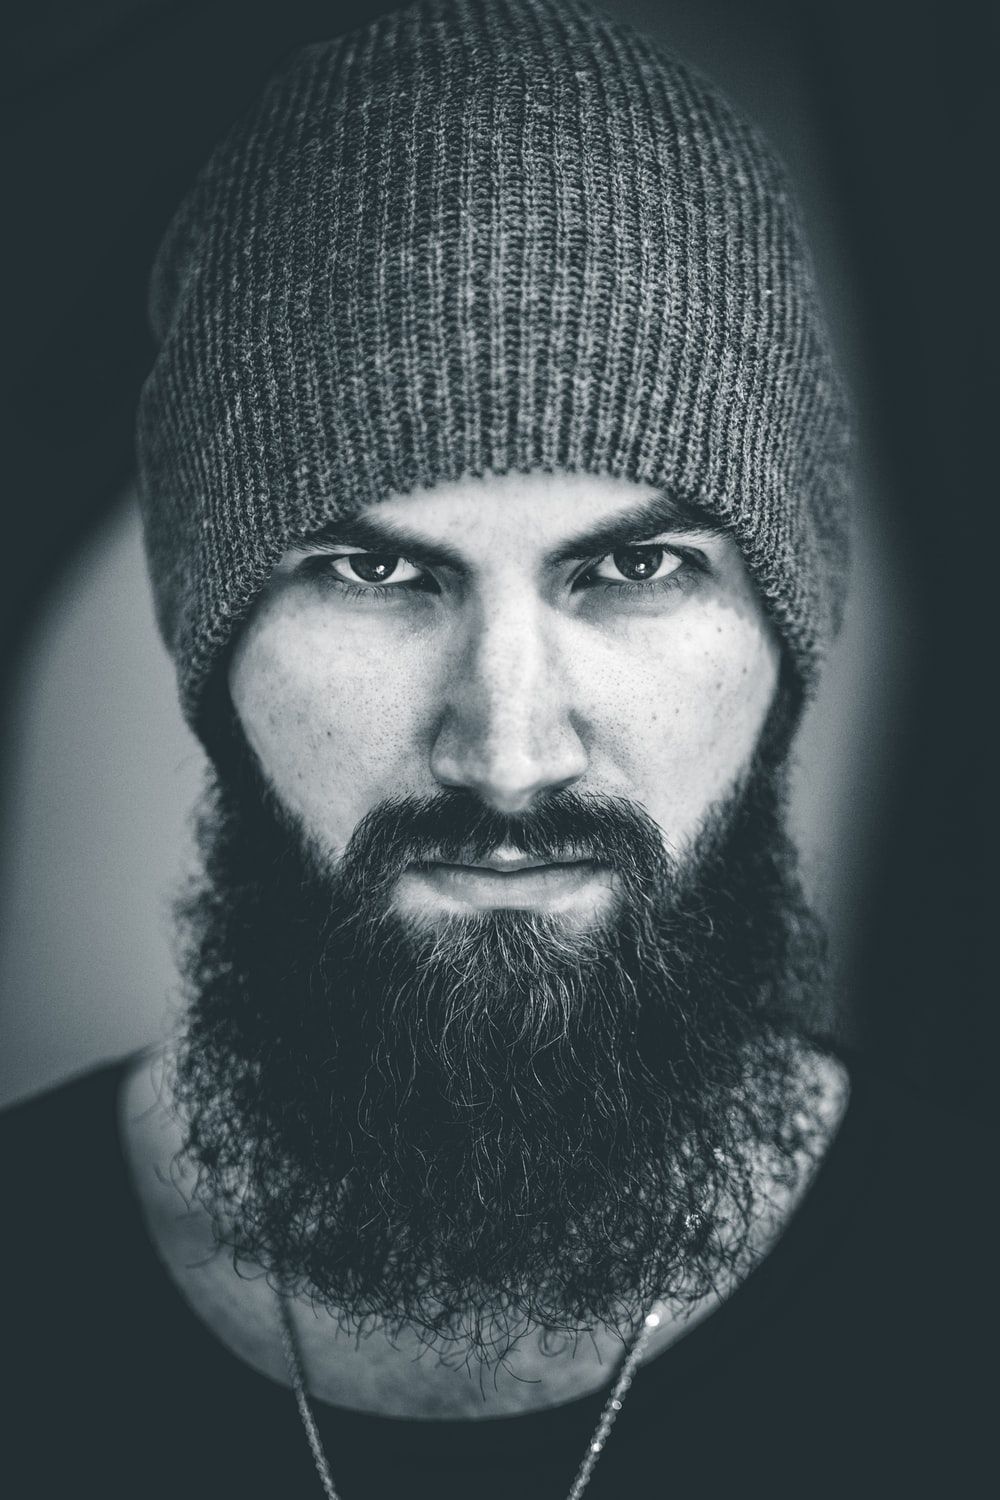 Beard Man Wallpaper Free Beard Man Background